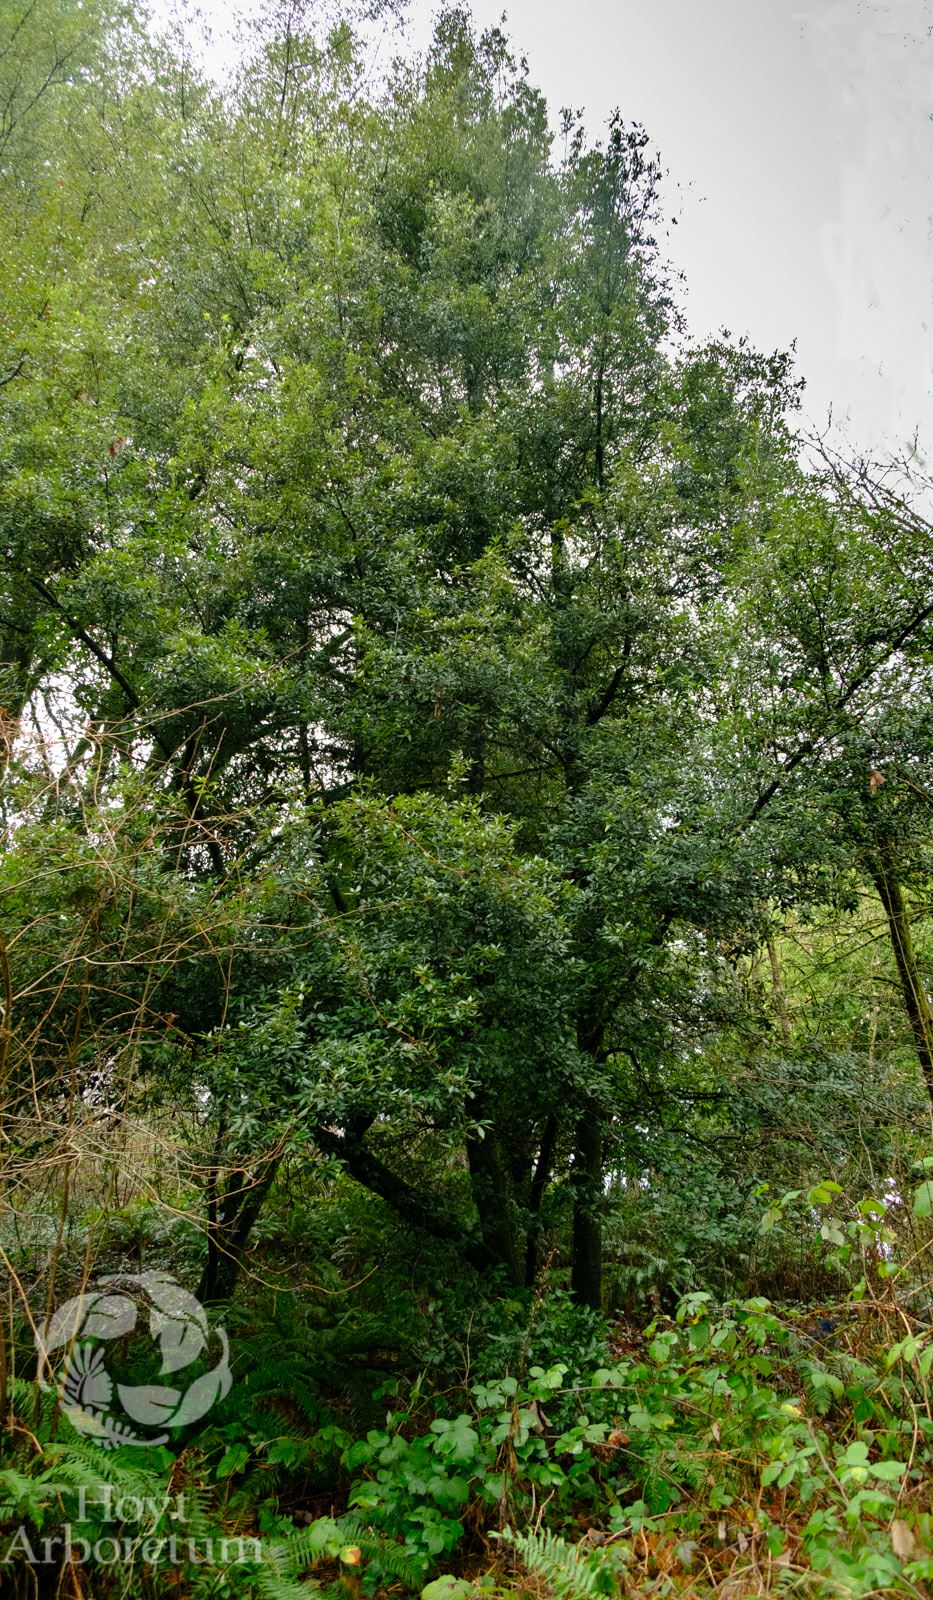 Quercus ilex - holly oak